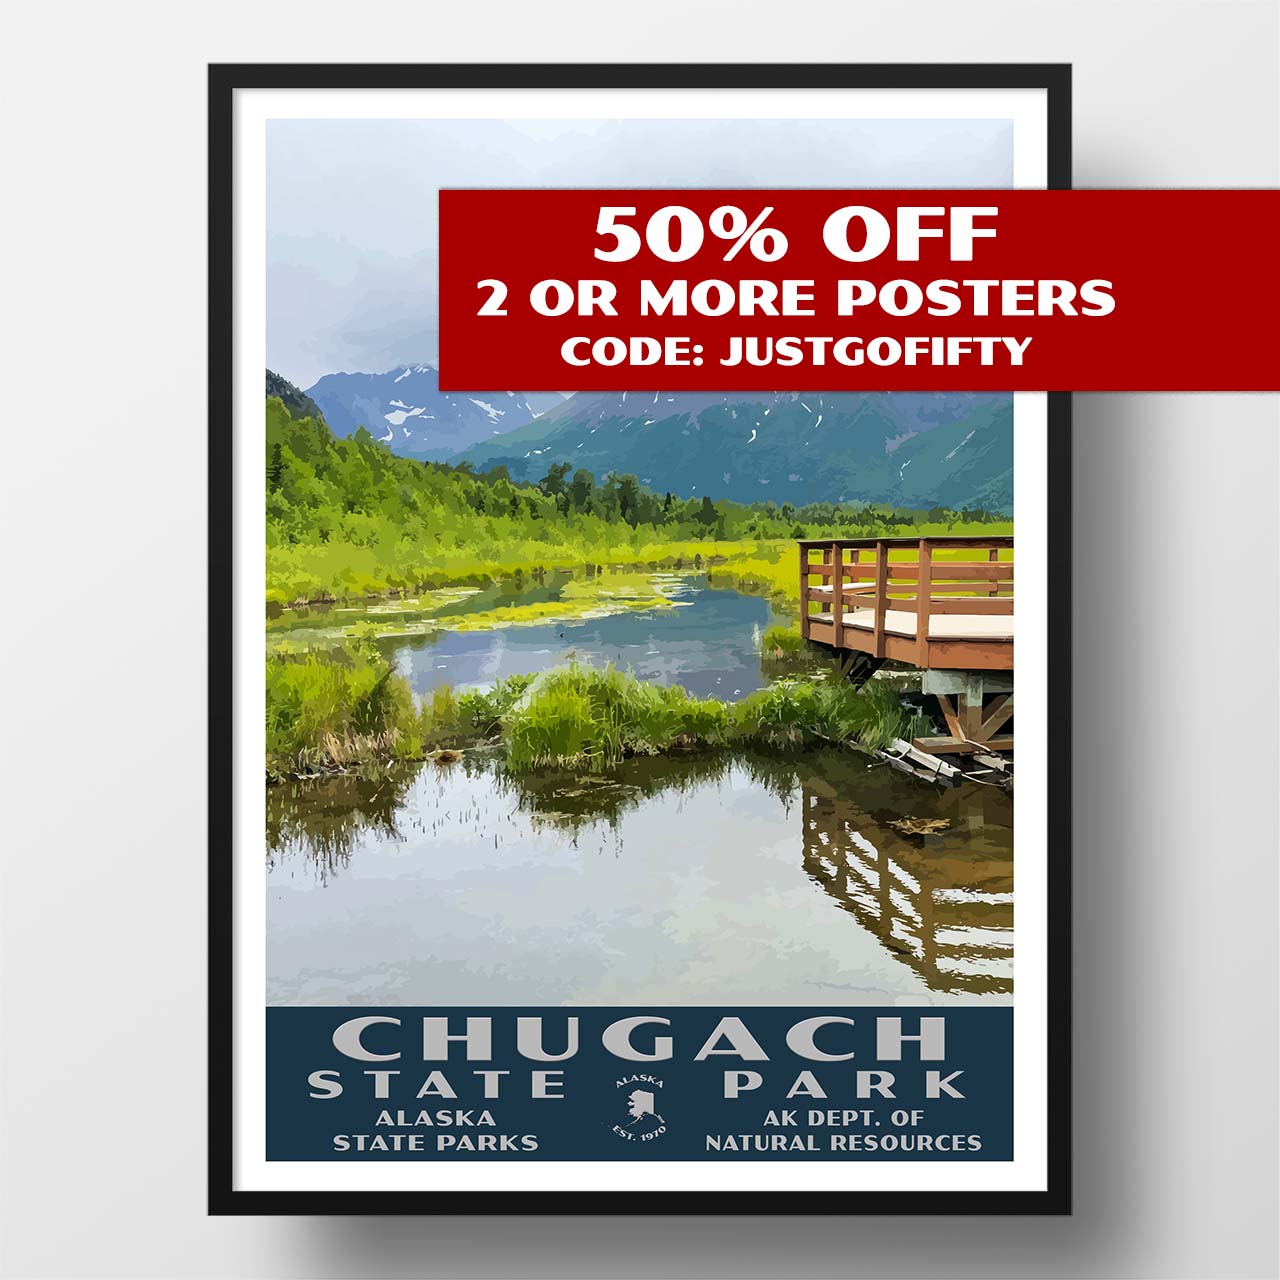 Chugage State Park poster